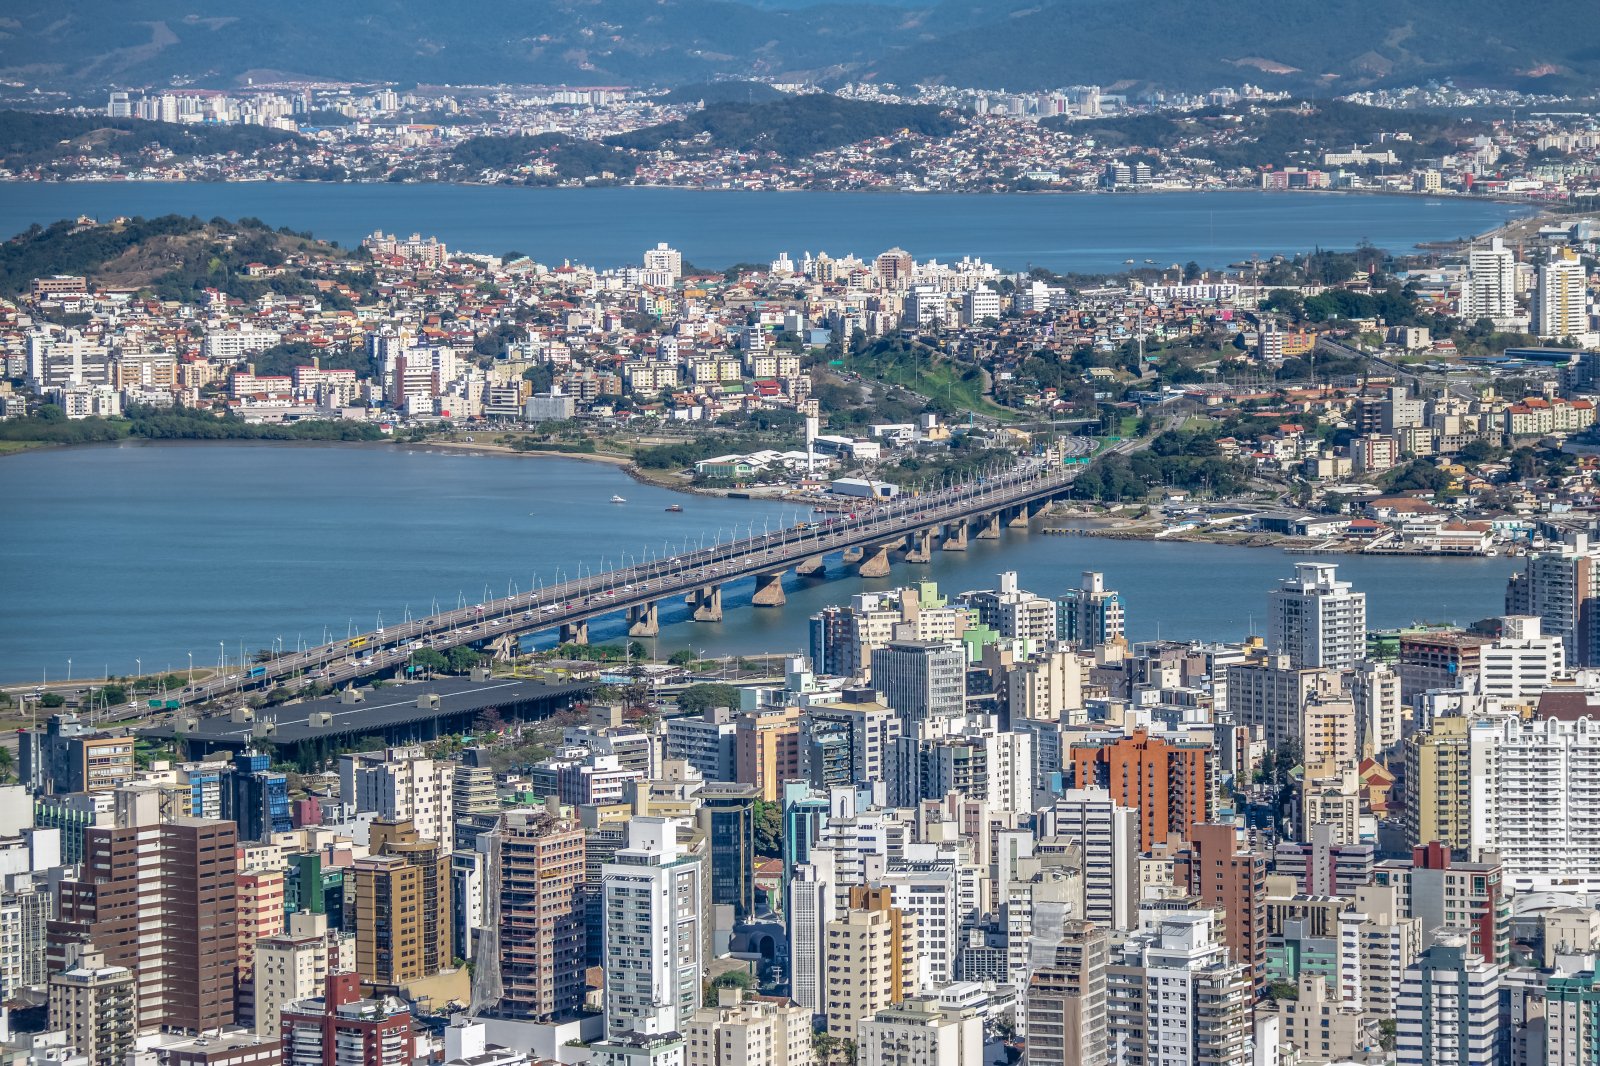 Florianópolis – Diego Grand / Shutterstock